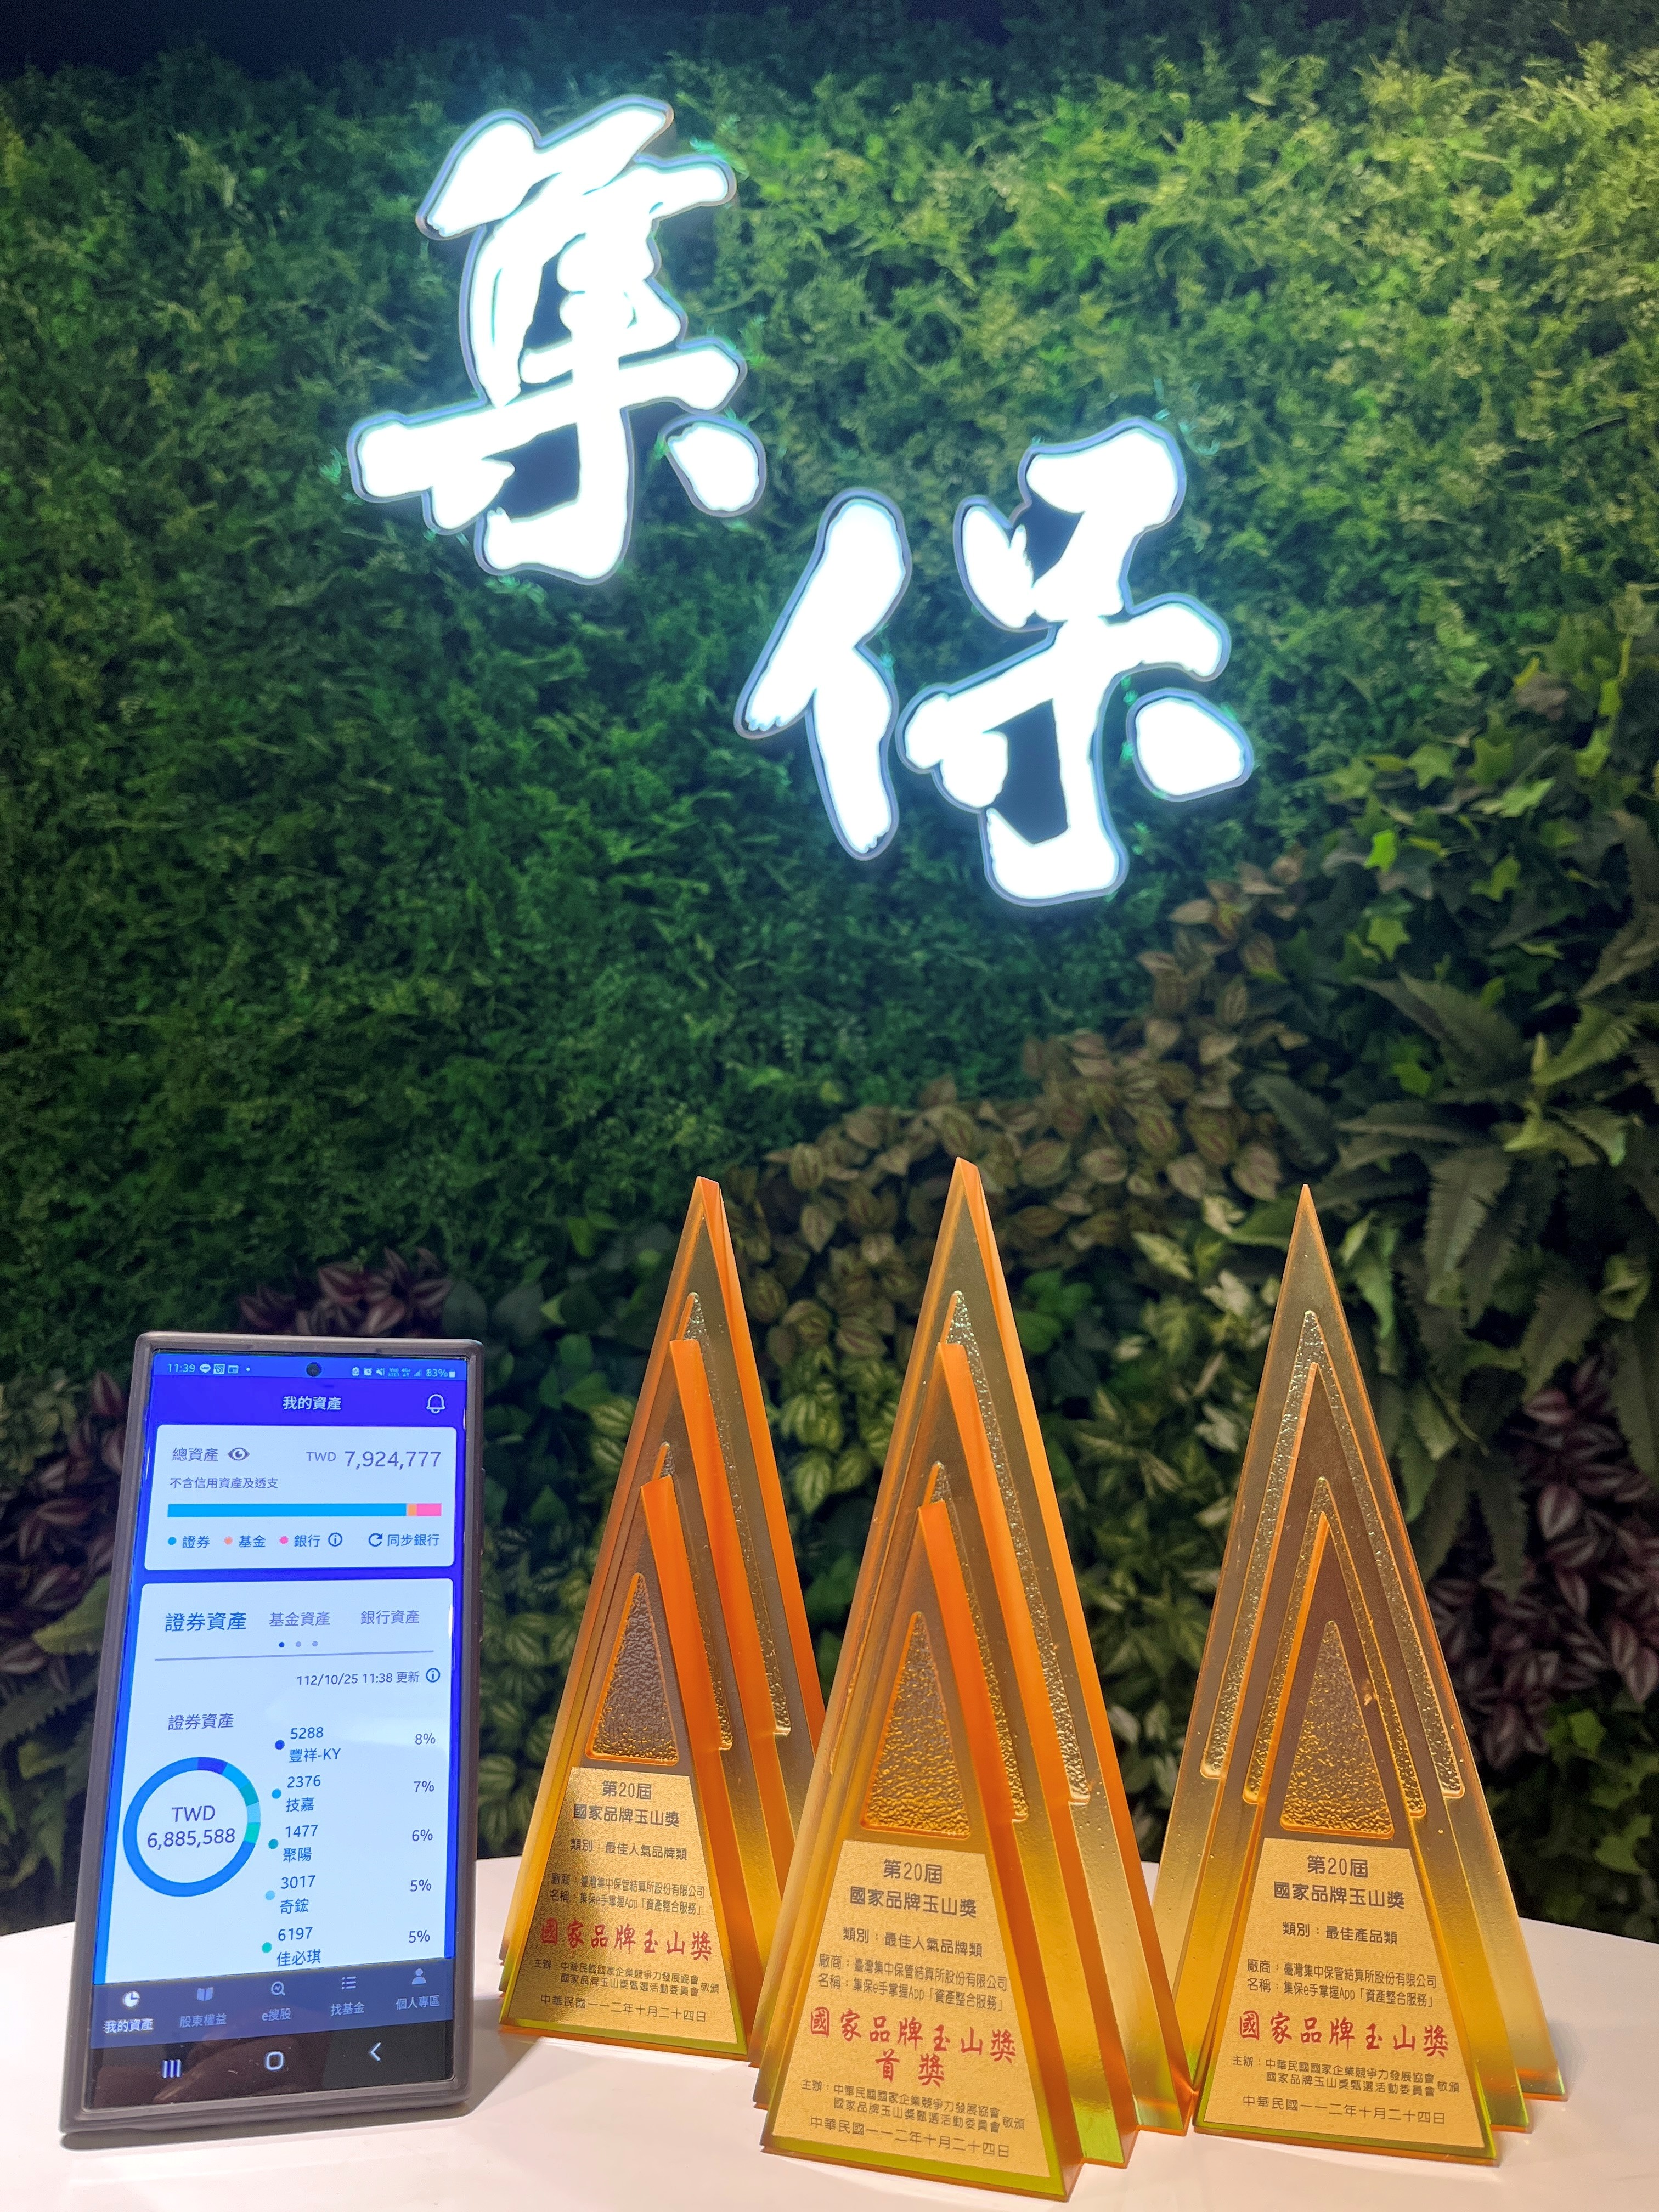 TDCC ePassbook App Wins Top Honor at the National Brand Yushan Award